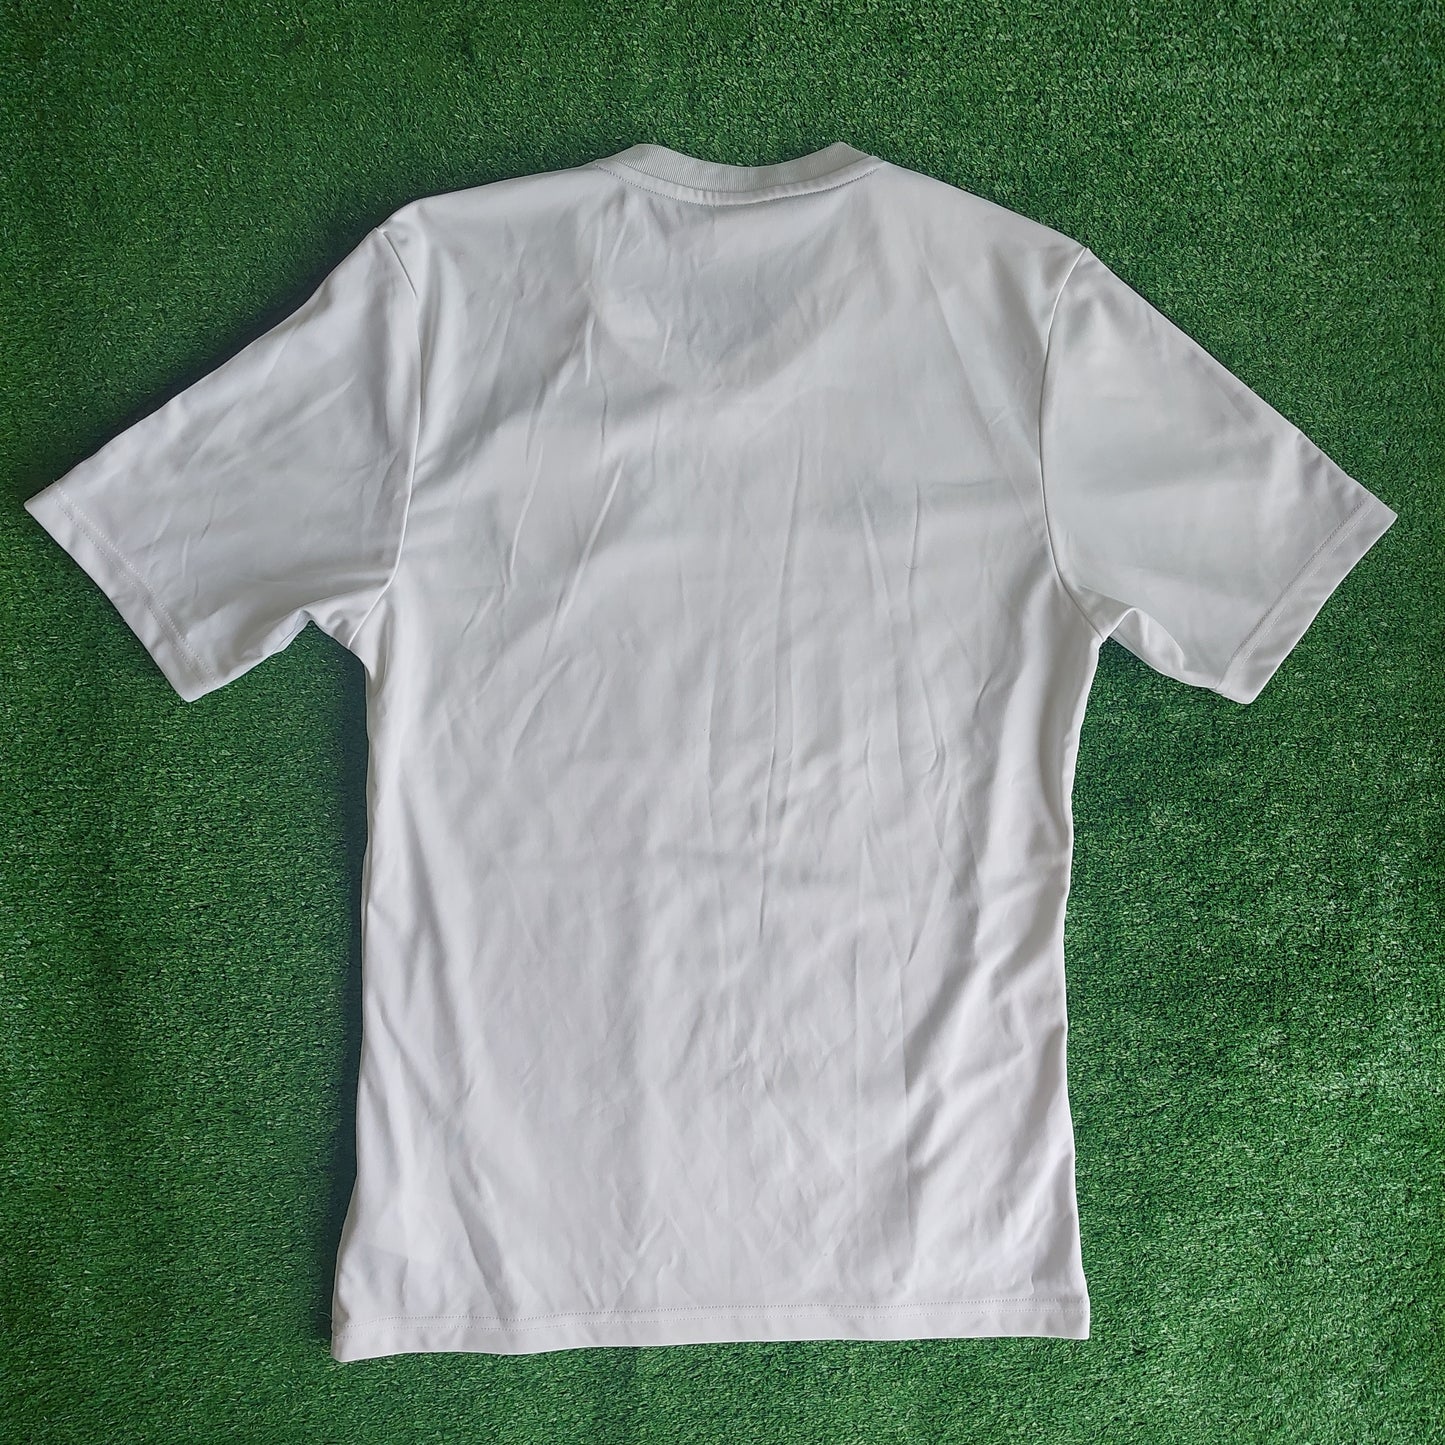 Bristol City 2012/13 Away Shirt (Excellent) - Size S